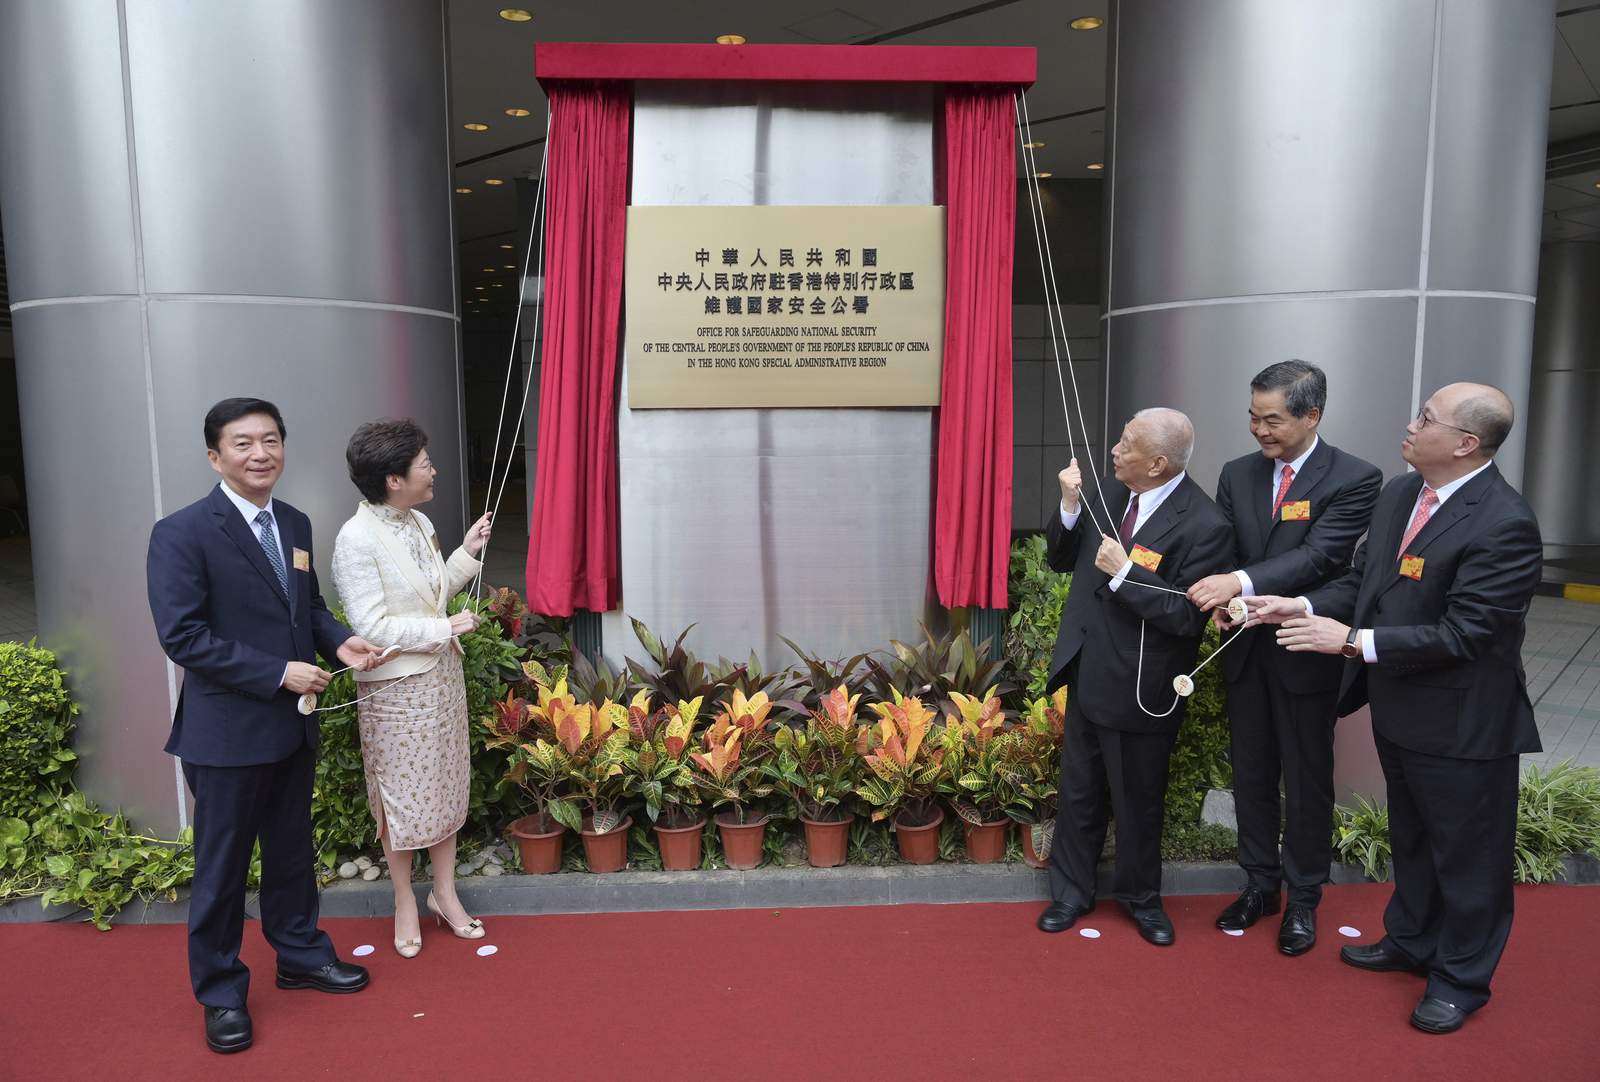 Hong Kong inaugurates Beijing's national security office